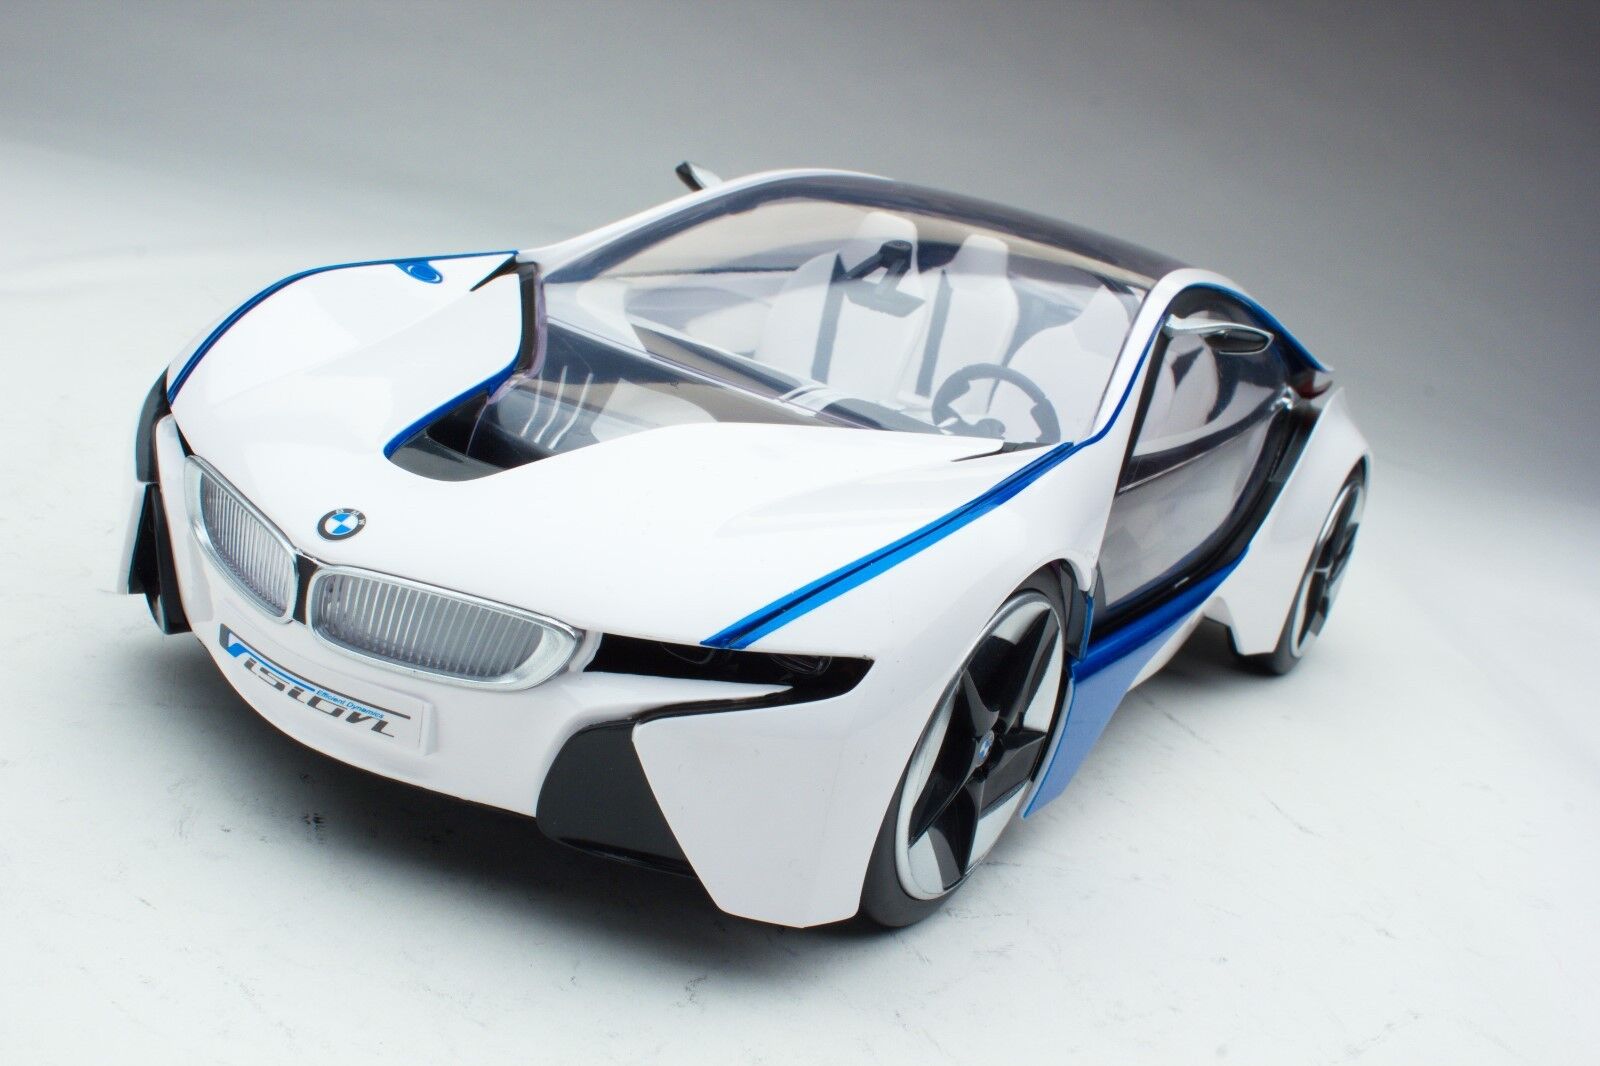 BMW i8 Concept / VED / Quality R/C Model Car / Big Scale 1:14 / Item # ERC08545